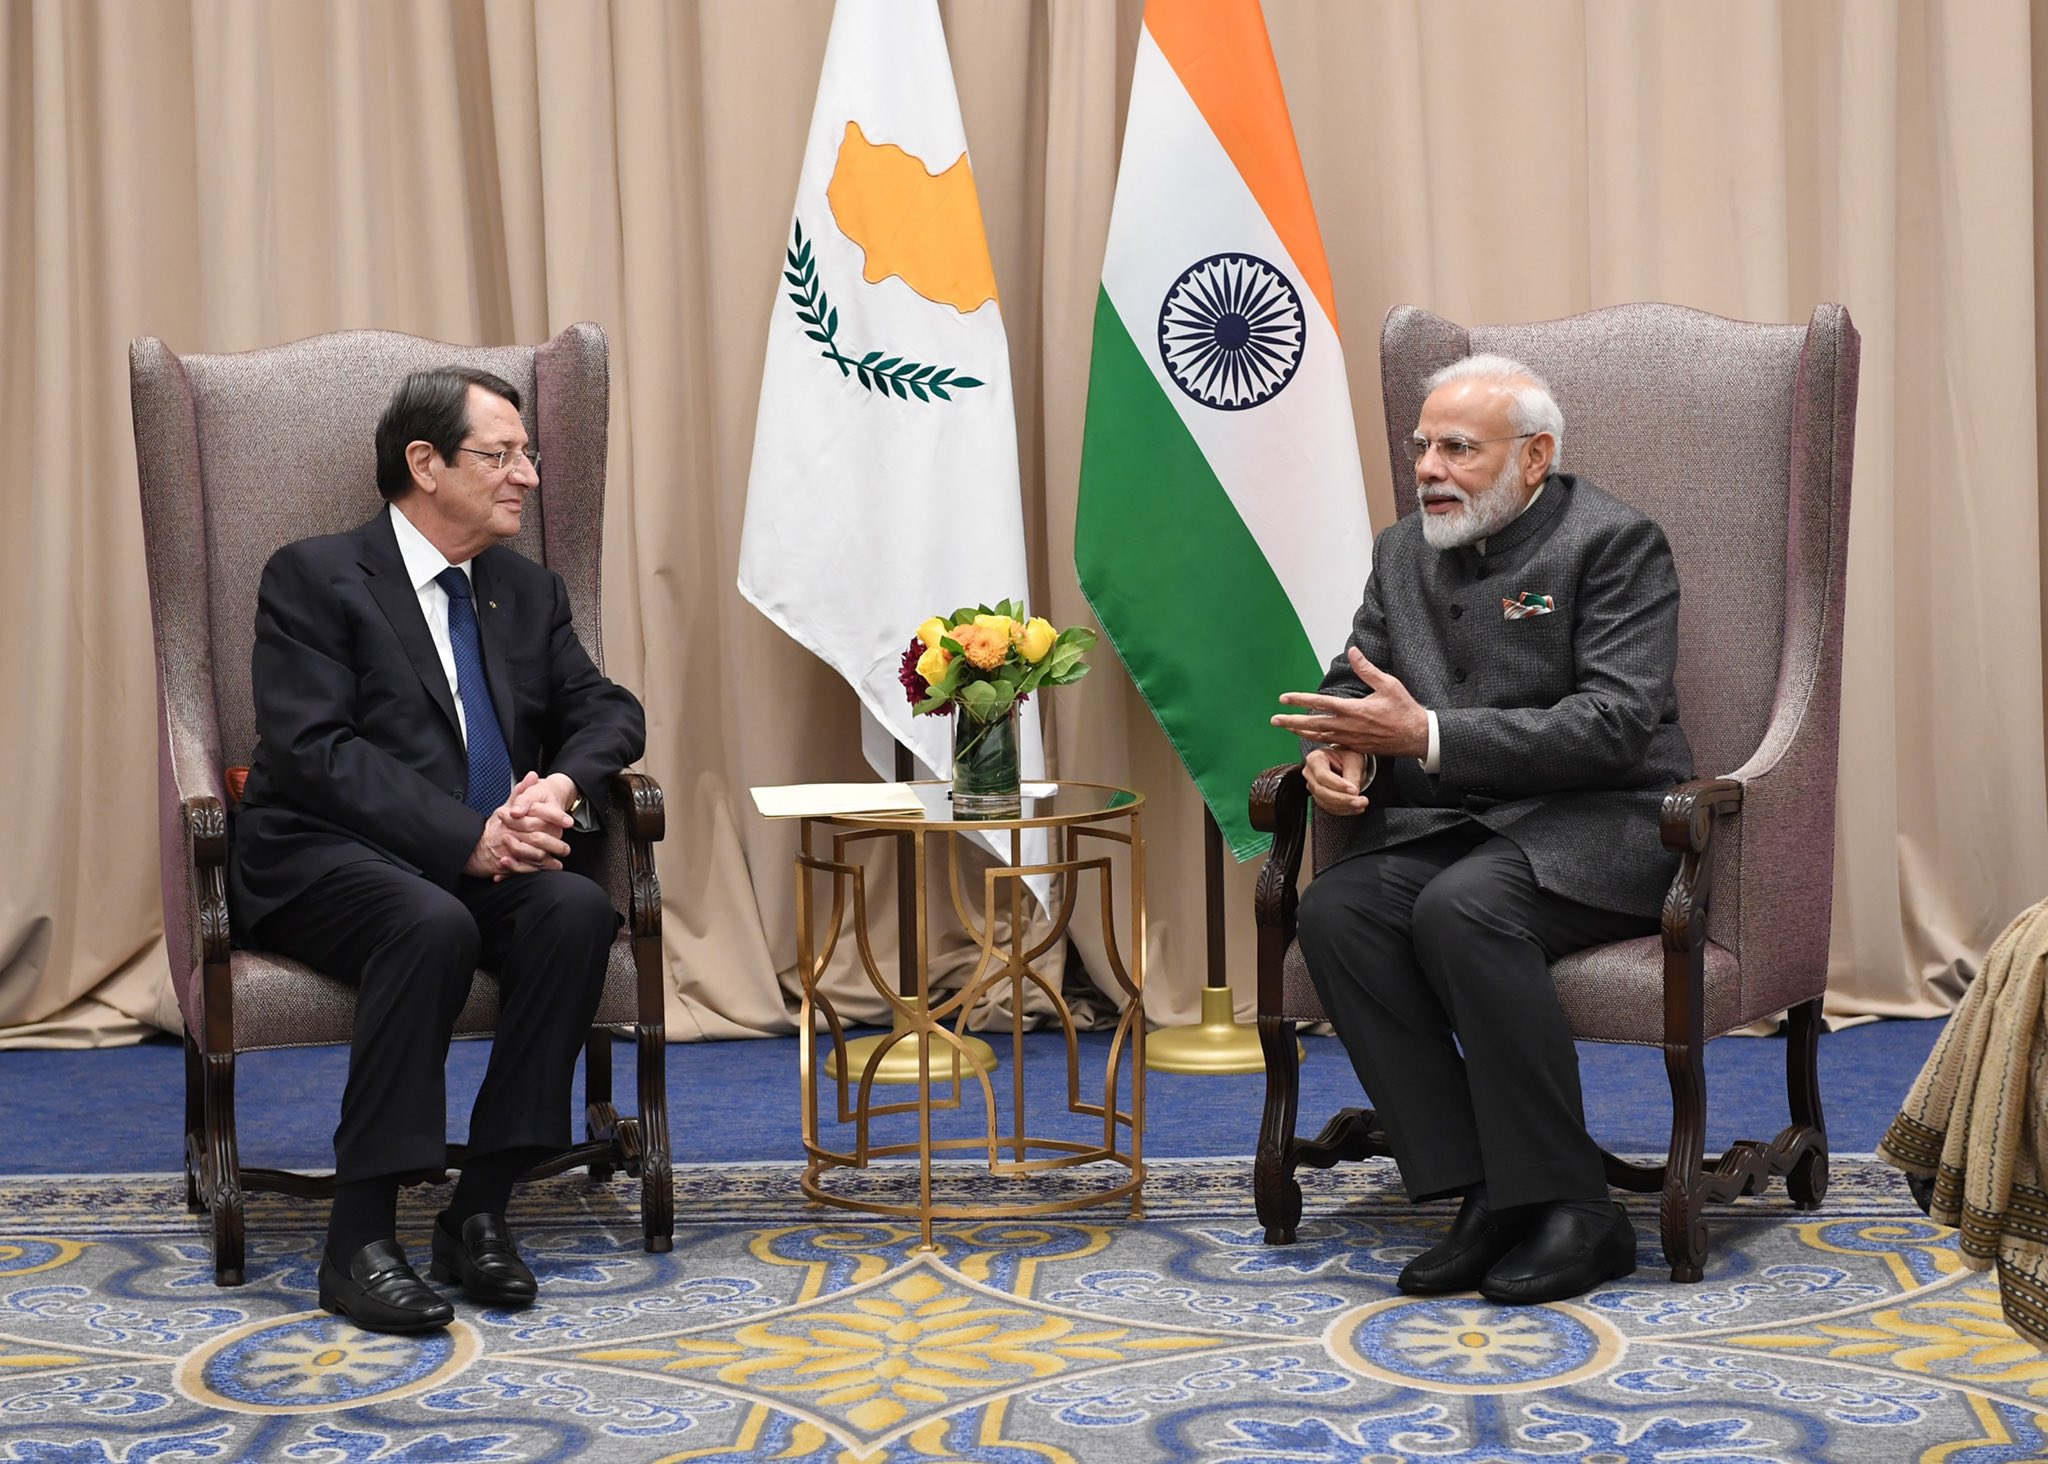 Prime Minister Narendra Modi of India with President of Cyprus Nicos Anastasiades. Image source: Prime Minister of Republic of India, Narendra Modi.